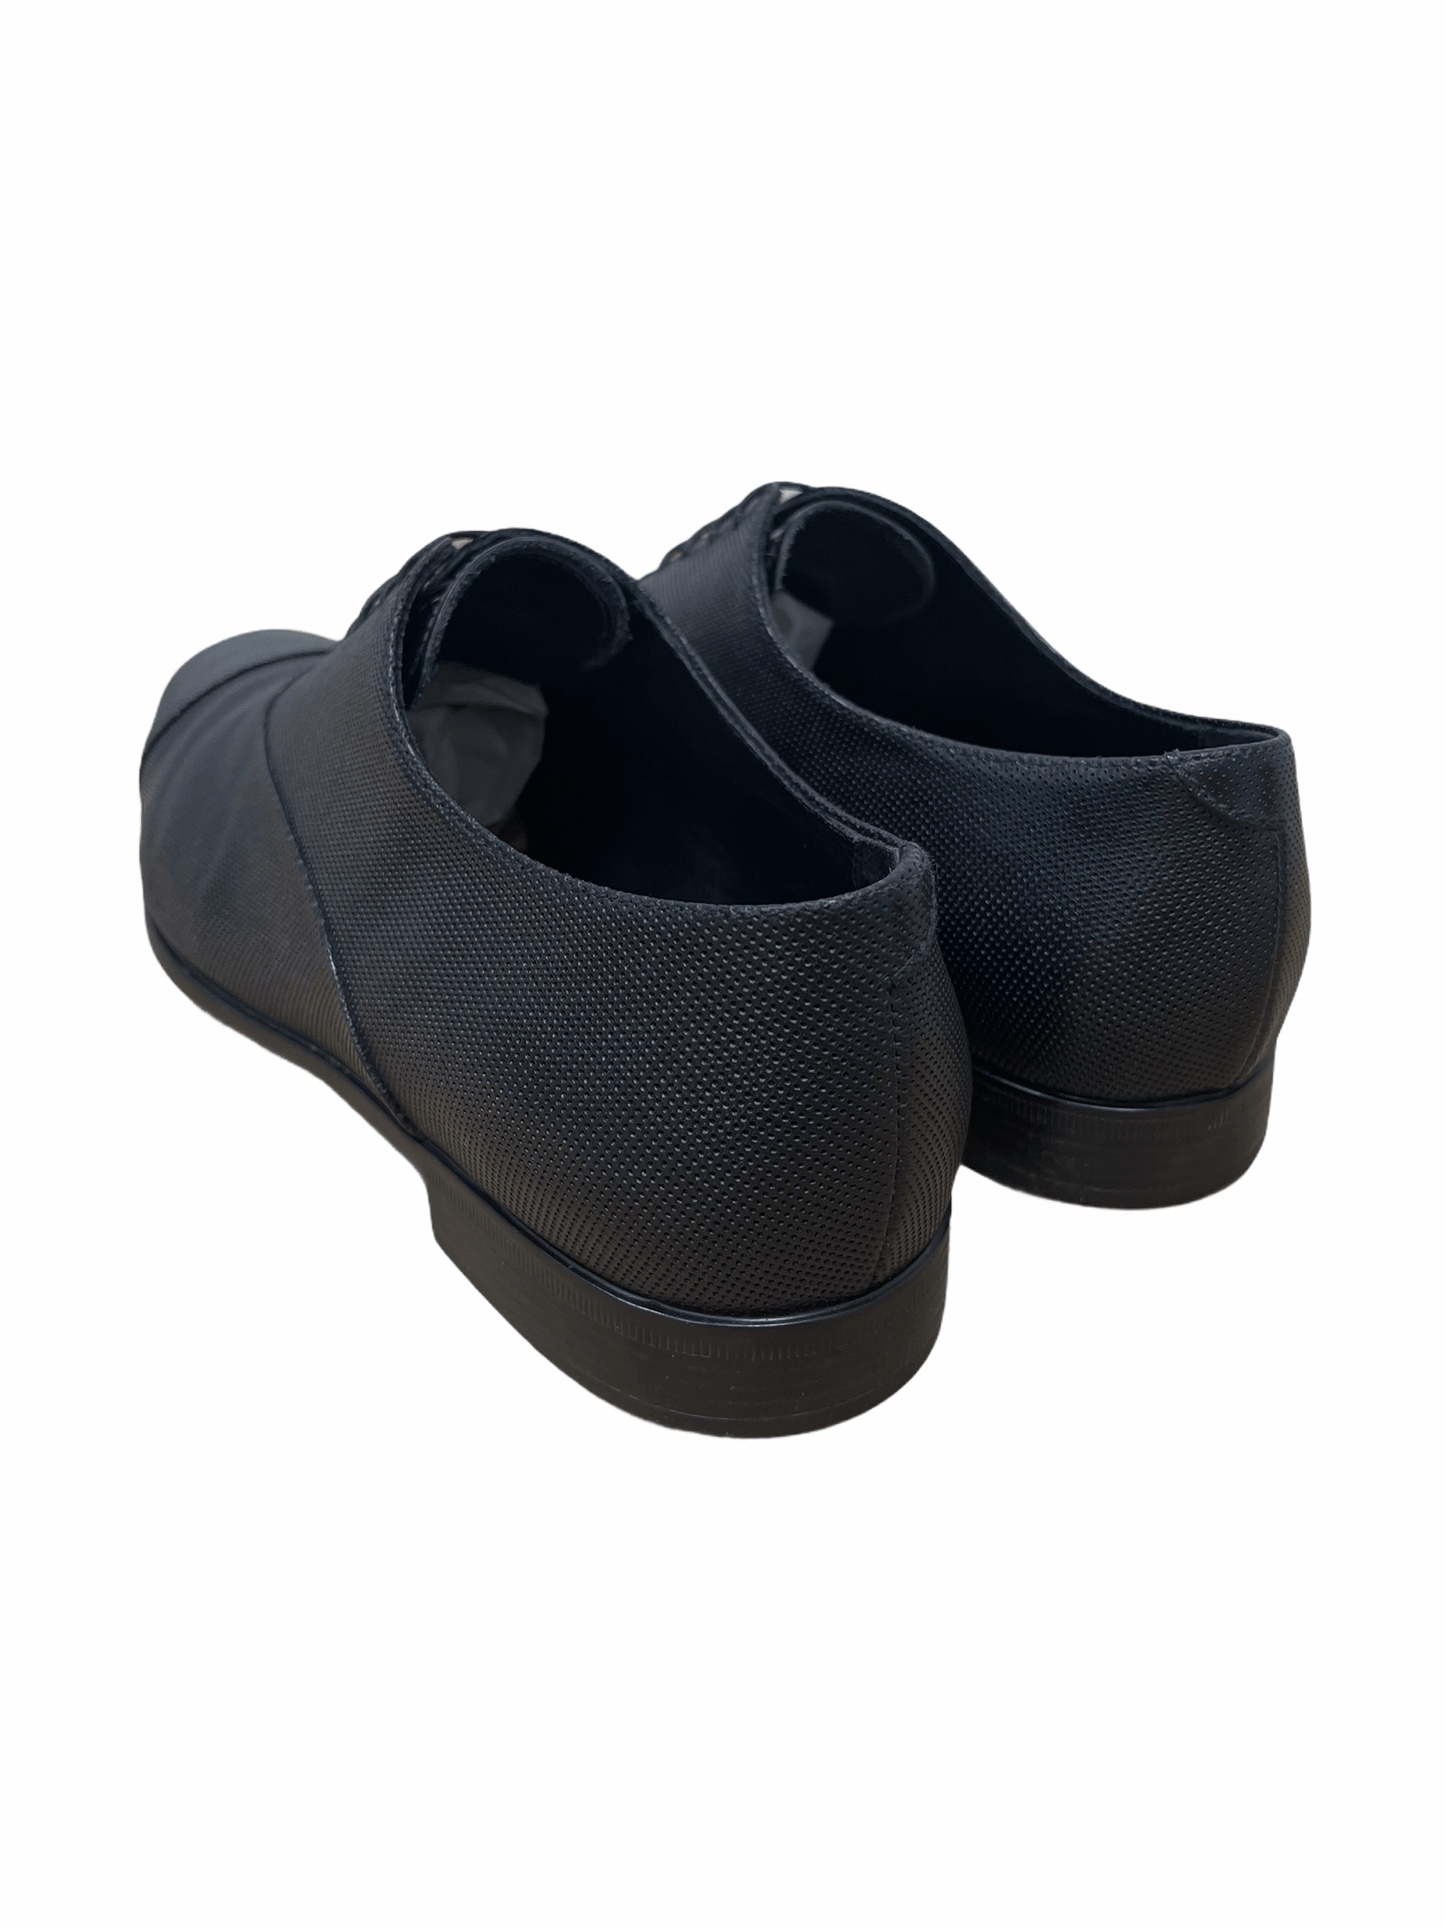 Giorgio Armani Black Cap Toe Oxford Leather Dress Shoes 10D—Genuine Design luxury 